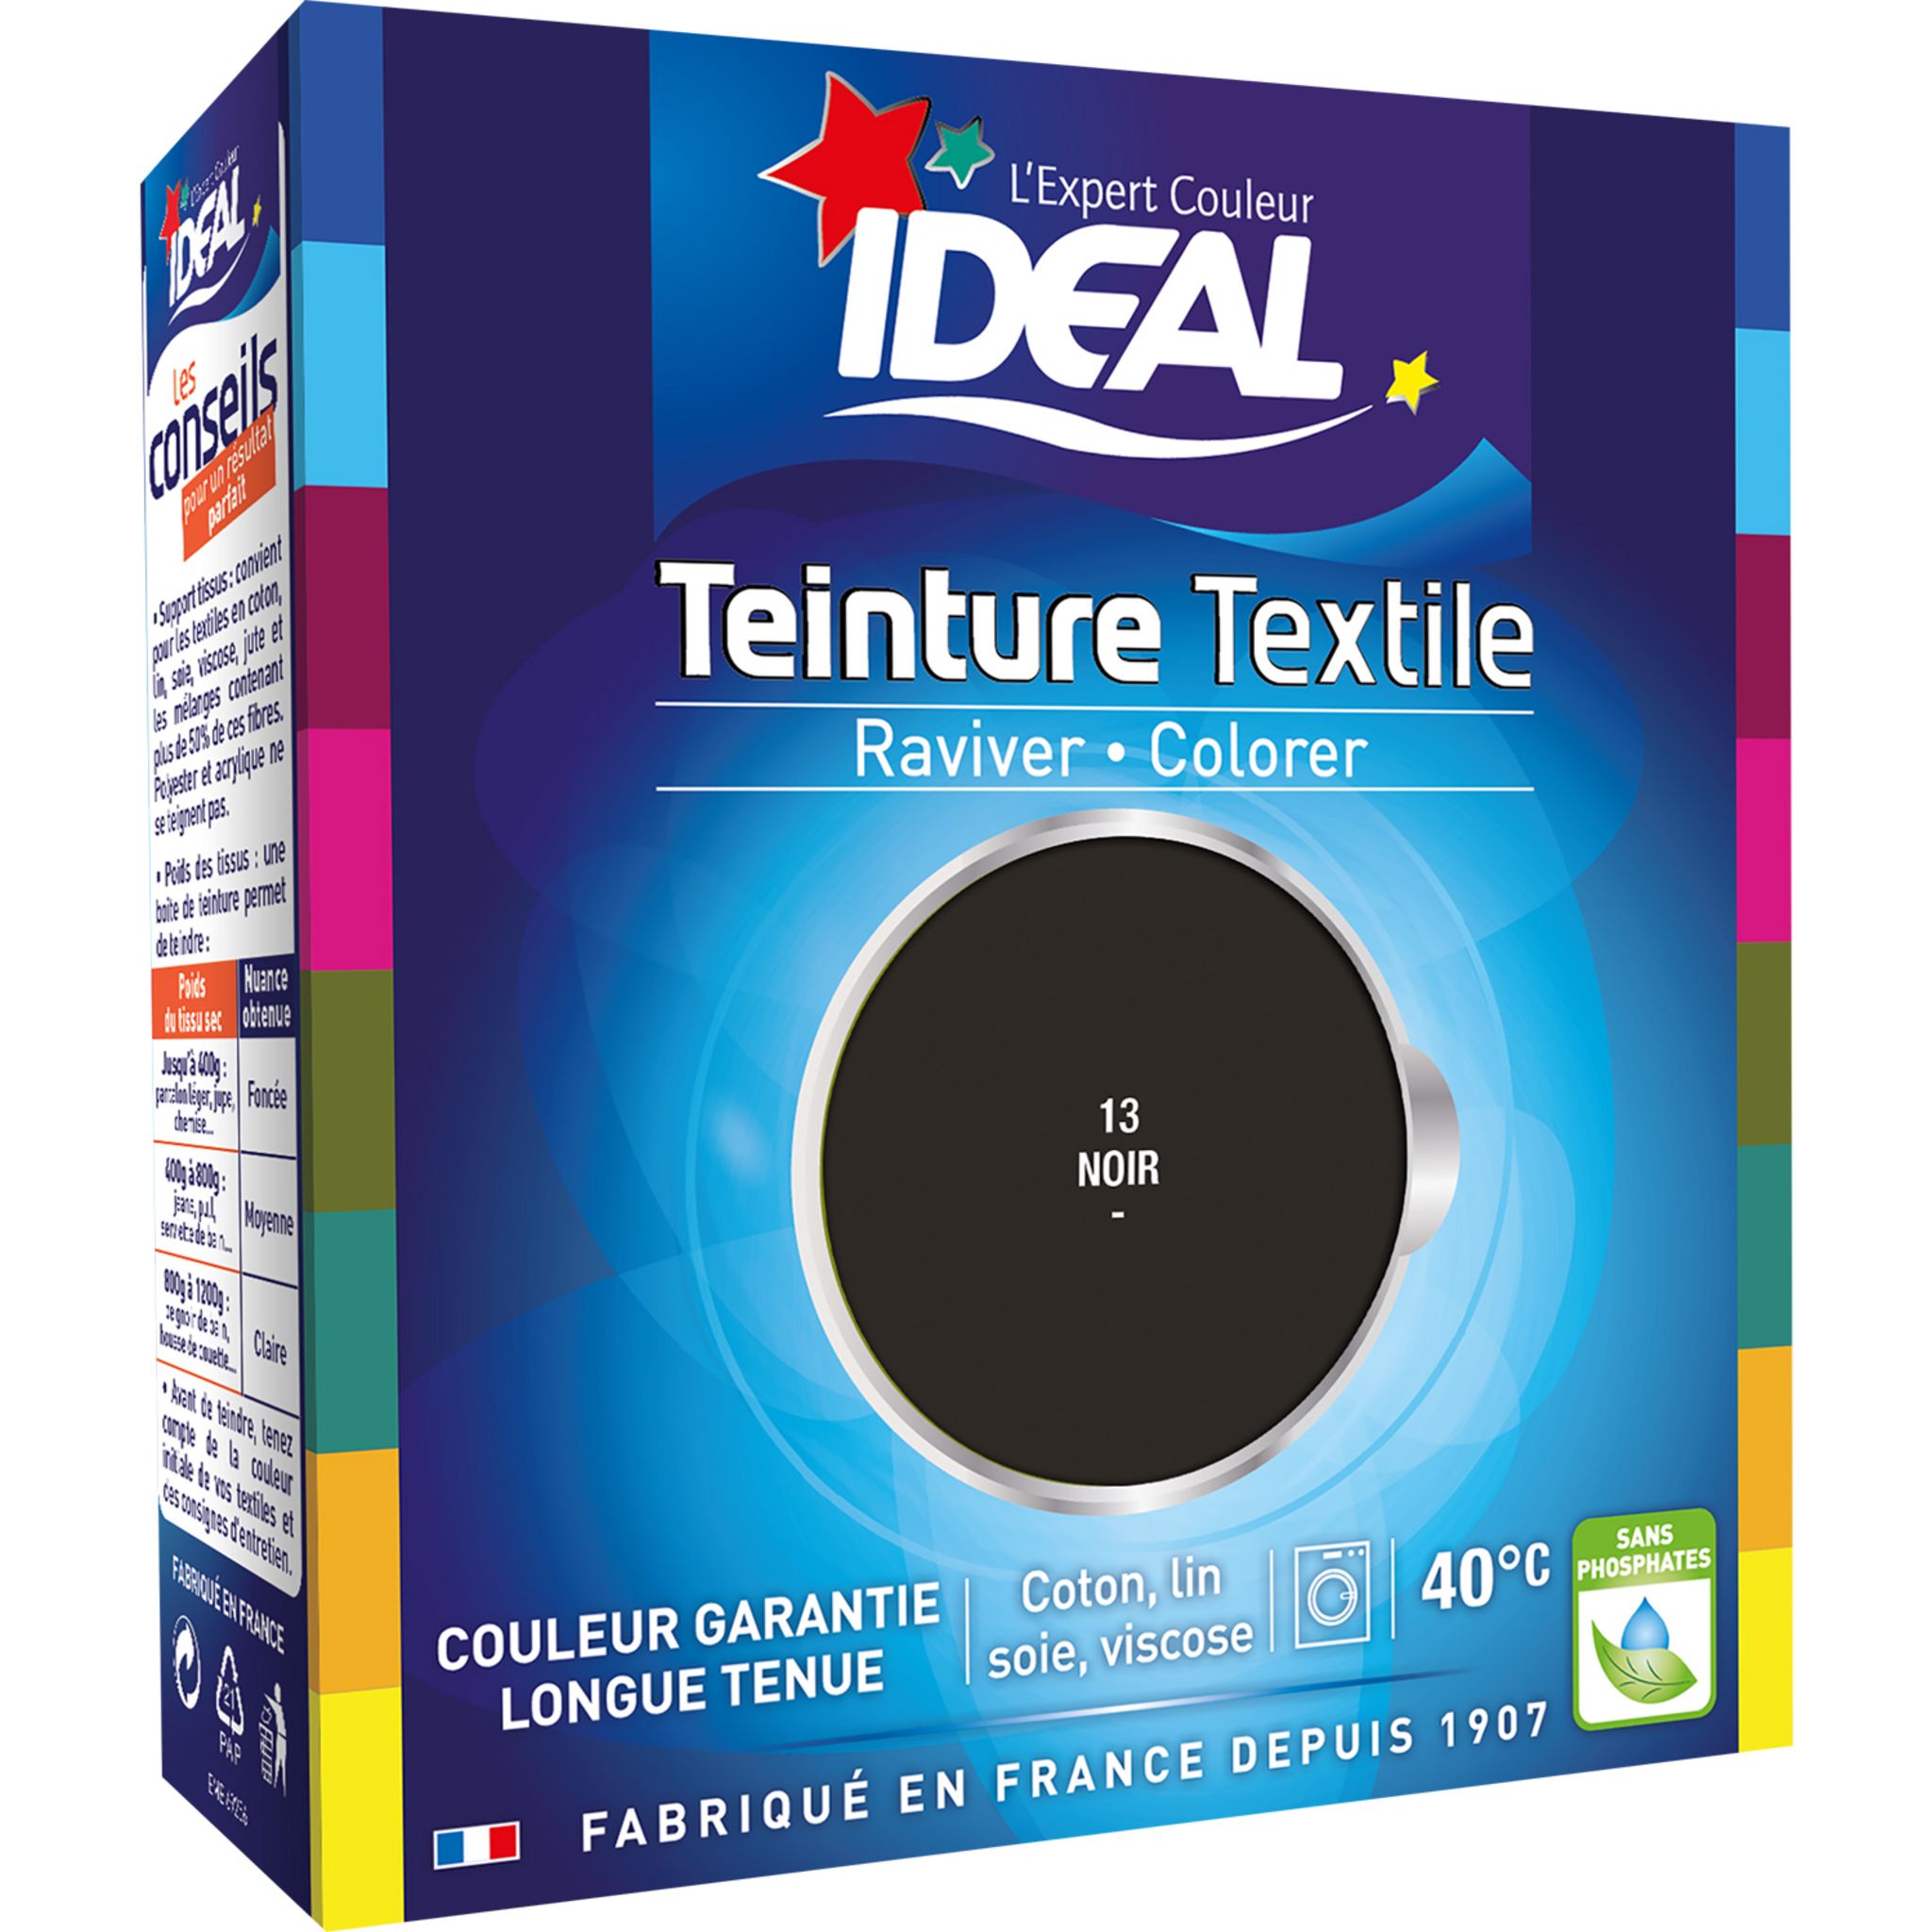 IDEAL Teinture textile liquide maxi bleu marine 75ml pas cher